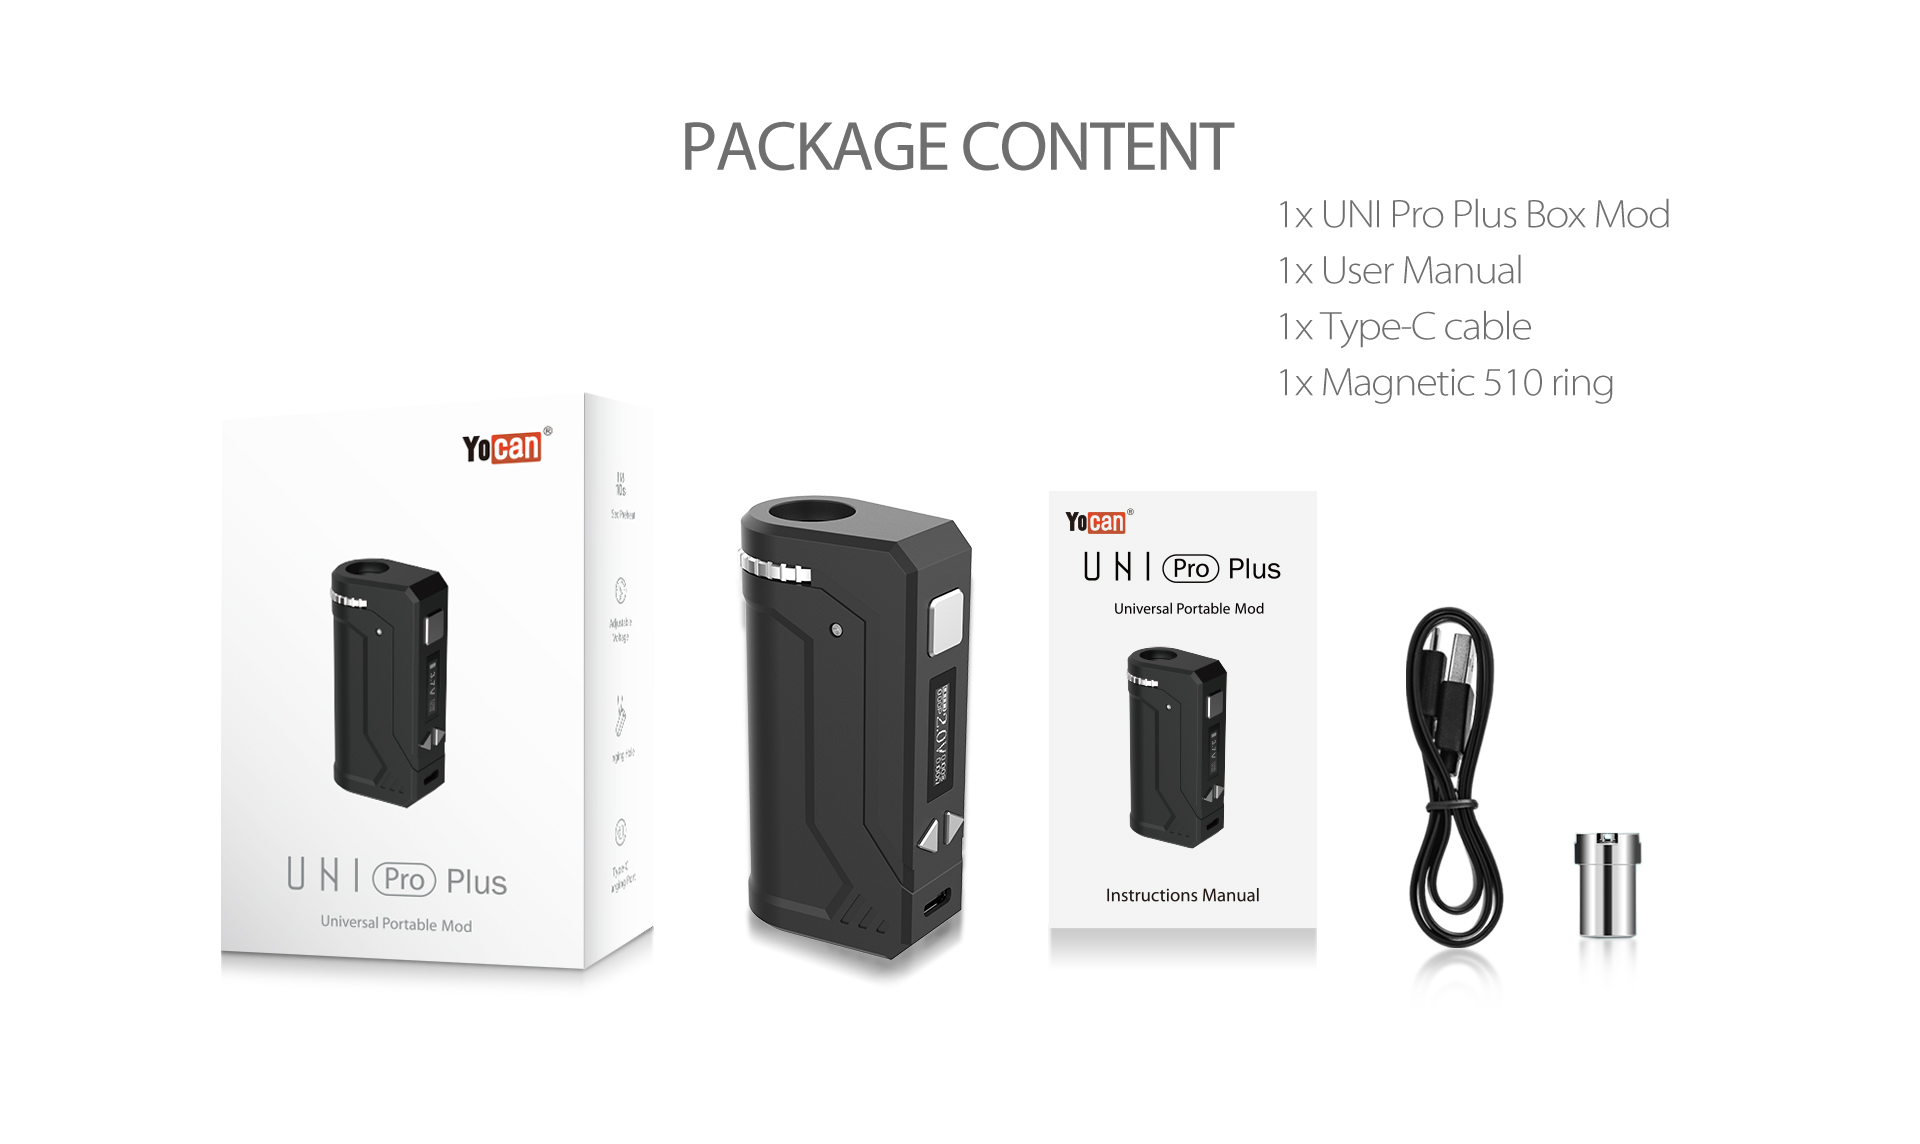 Yocan UNI Pro Plus Box Mod package content.